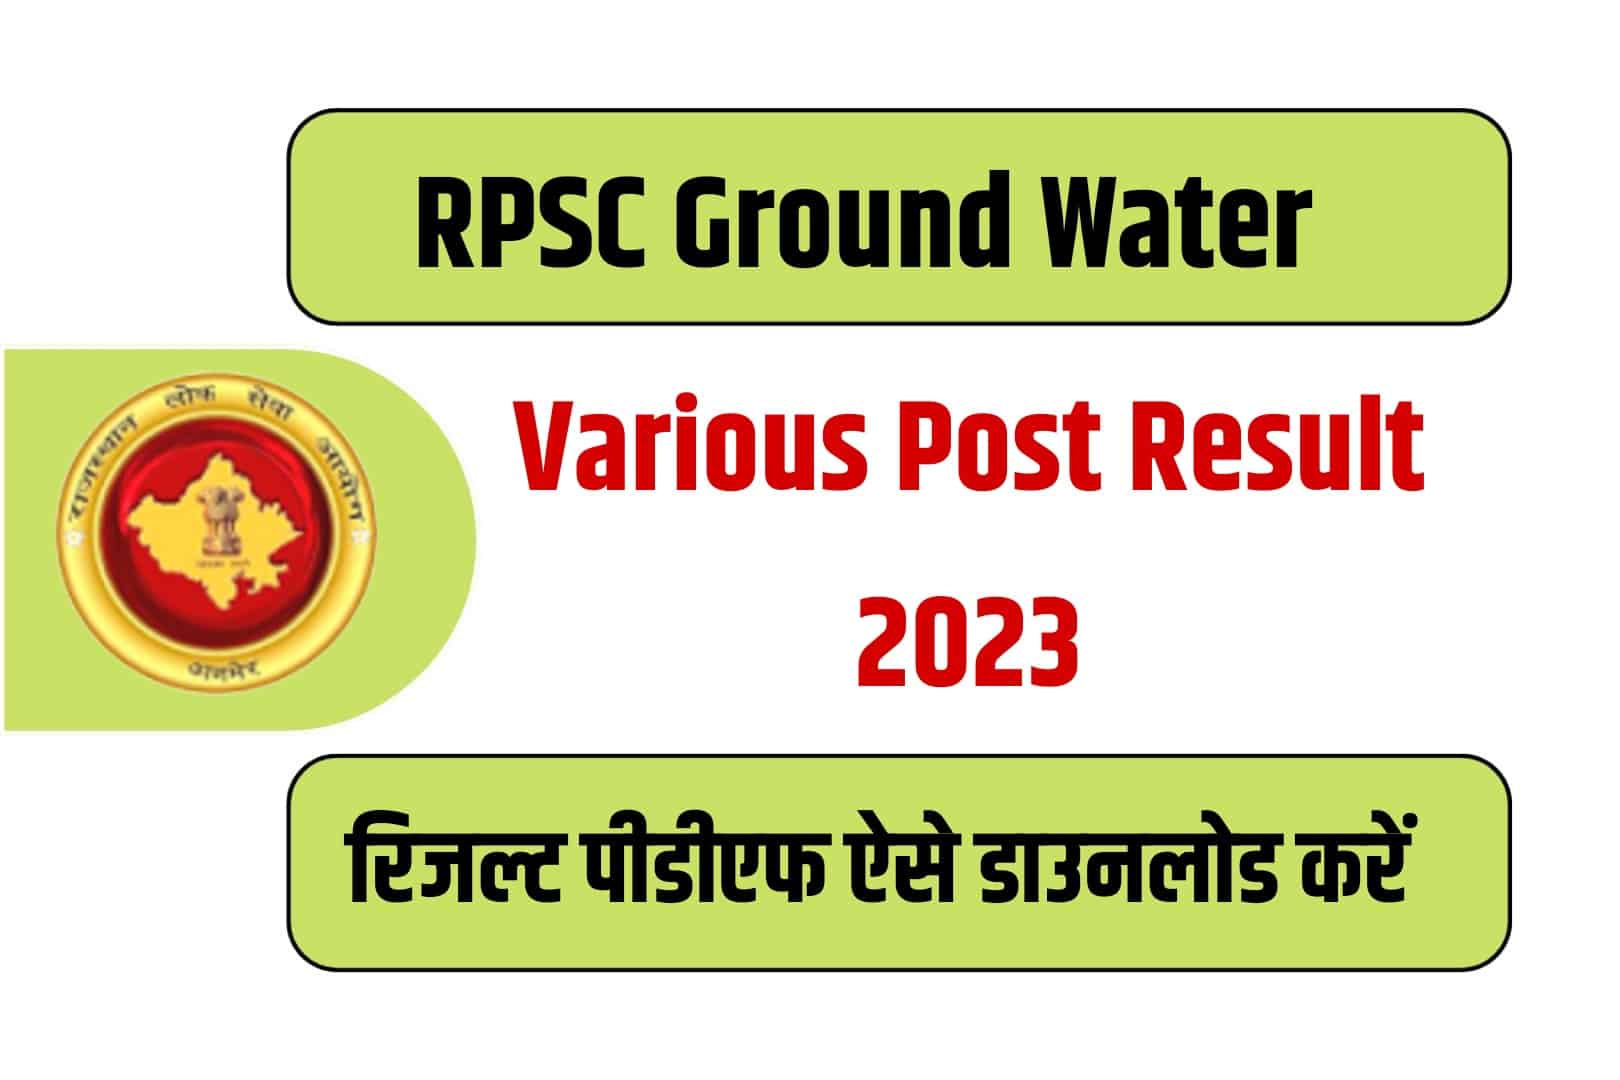 RPSC Ground Water Various Post Result 2023 | आरपीएससी ग्राउंड वाटर विभिन्न पद रिजल्ट